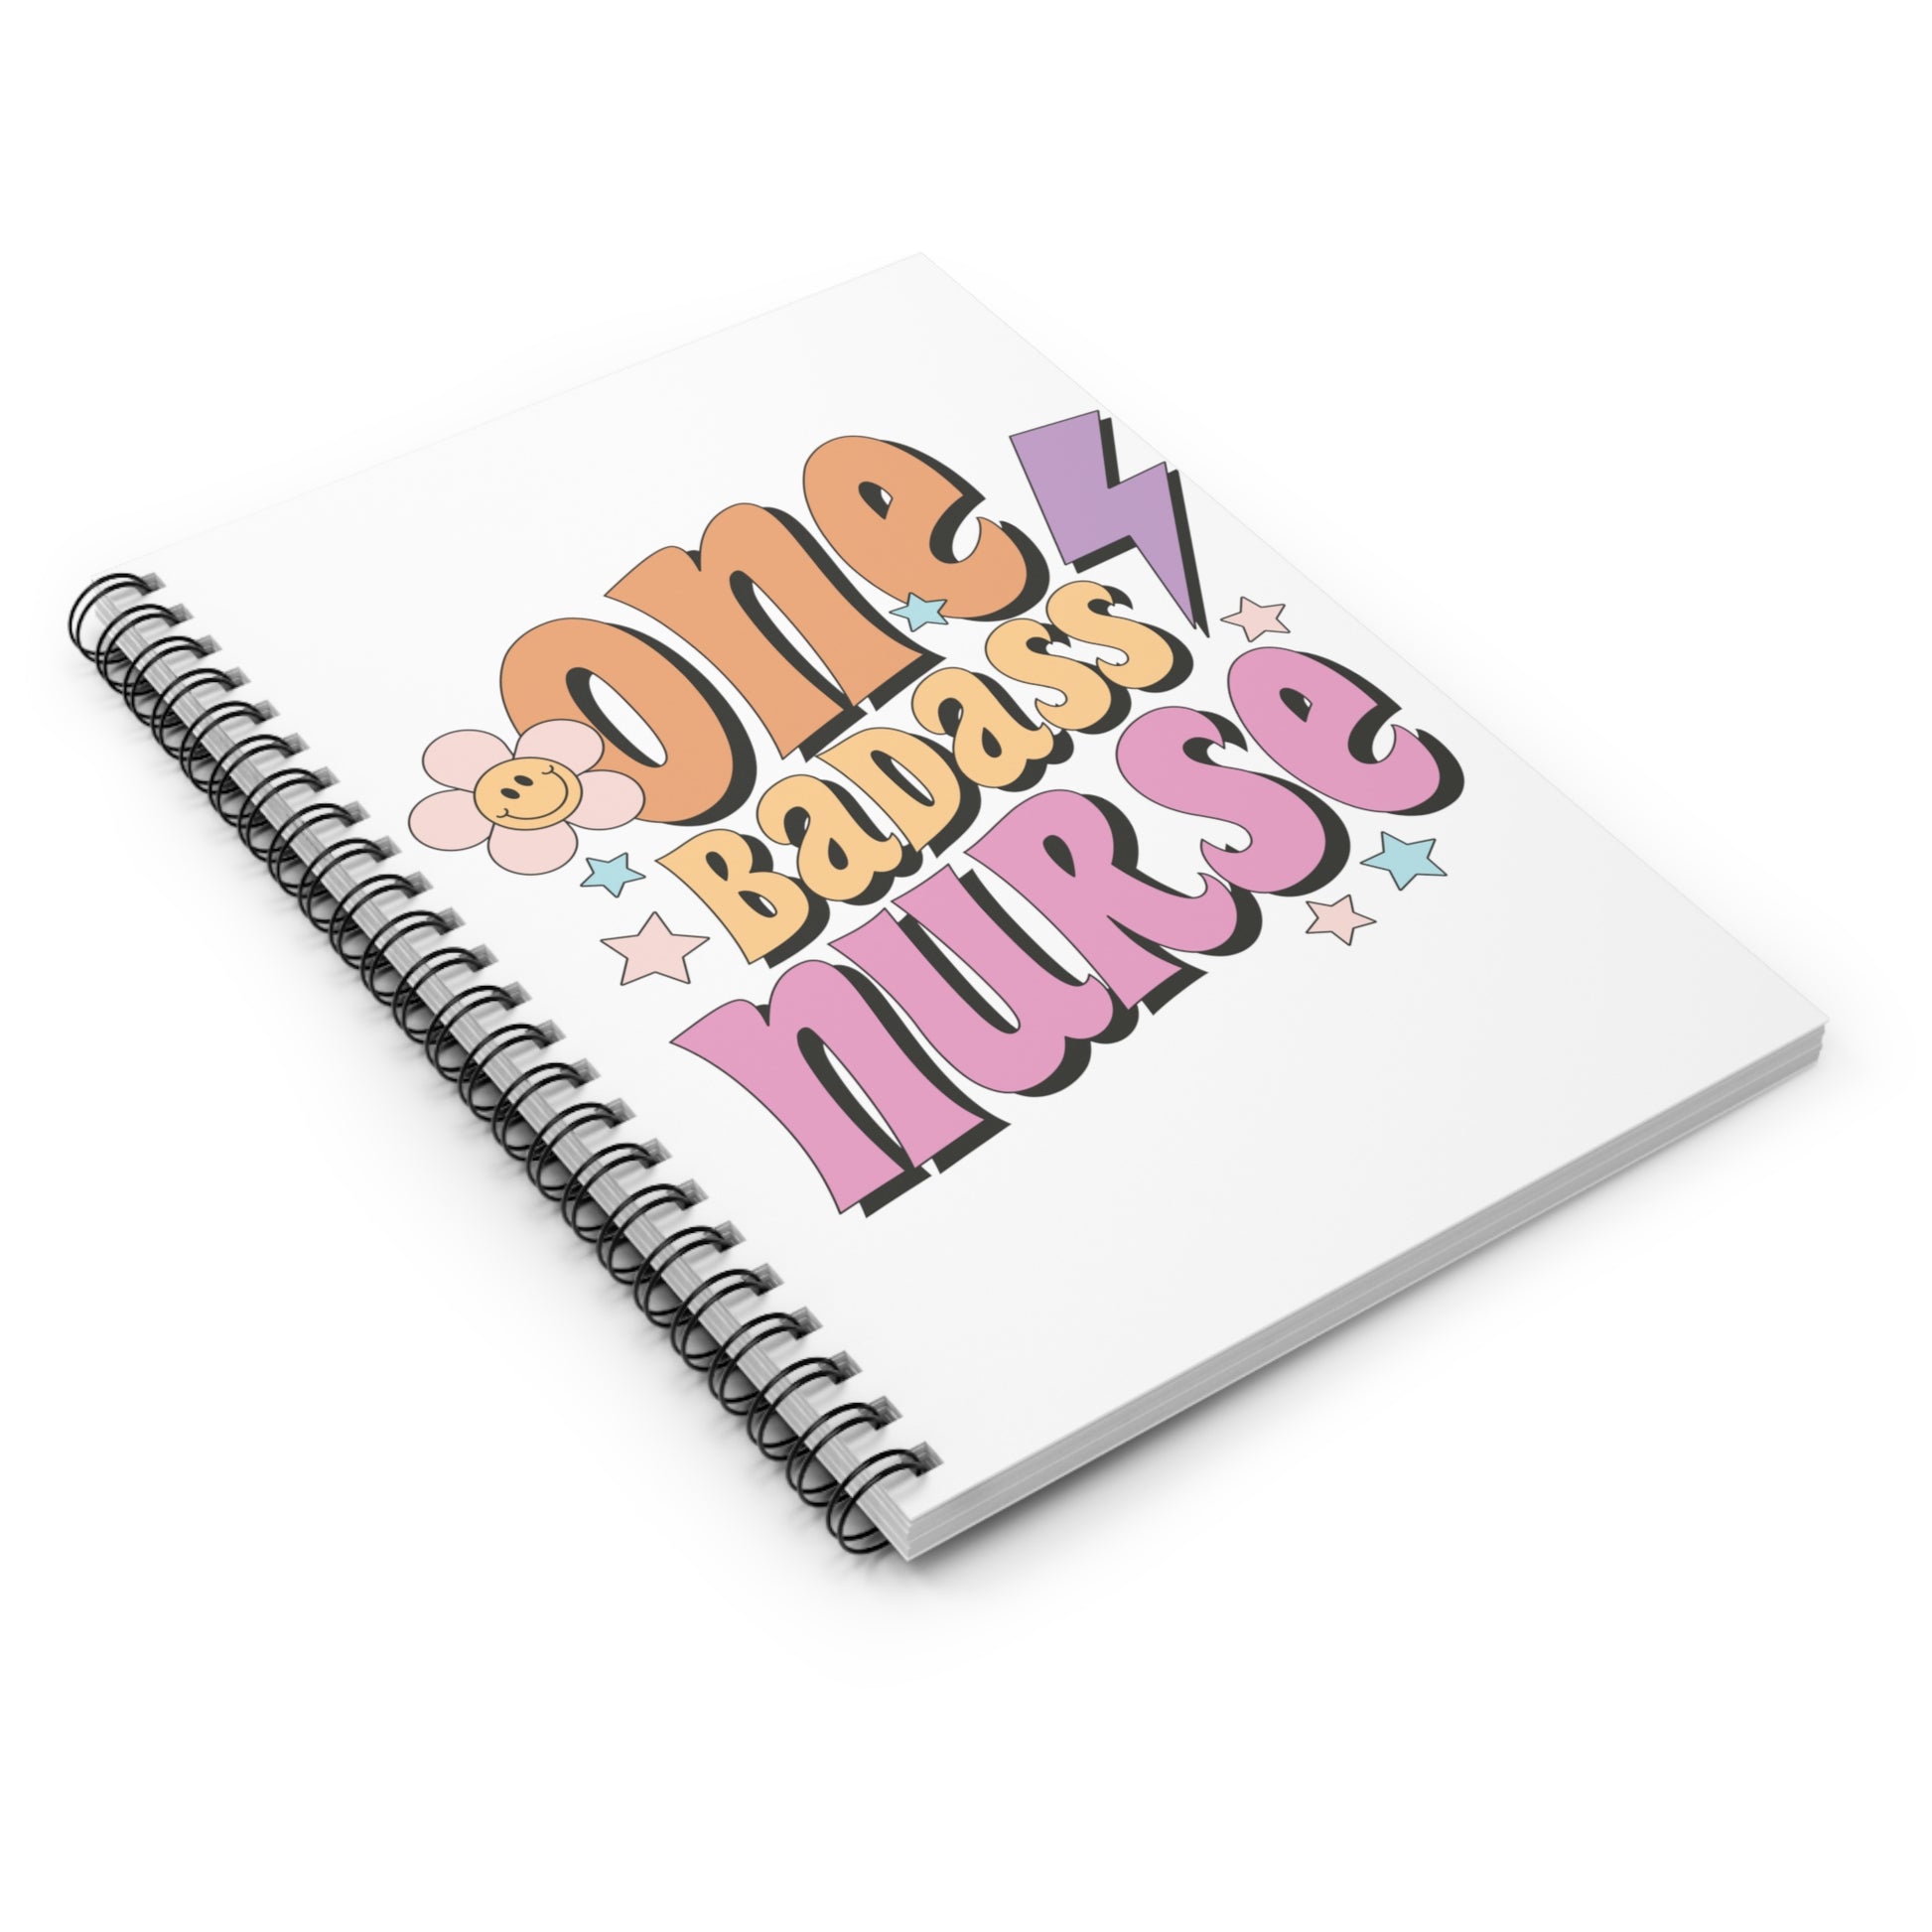 Badass Nurse: Spiral Notebook - Log Books - Journals - Diaries - and More Custom Printed by TheGlassyLass